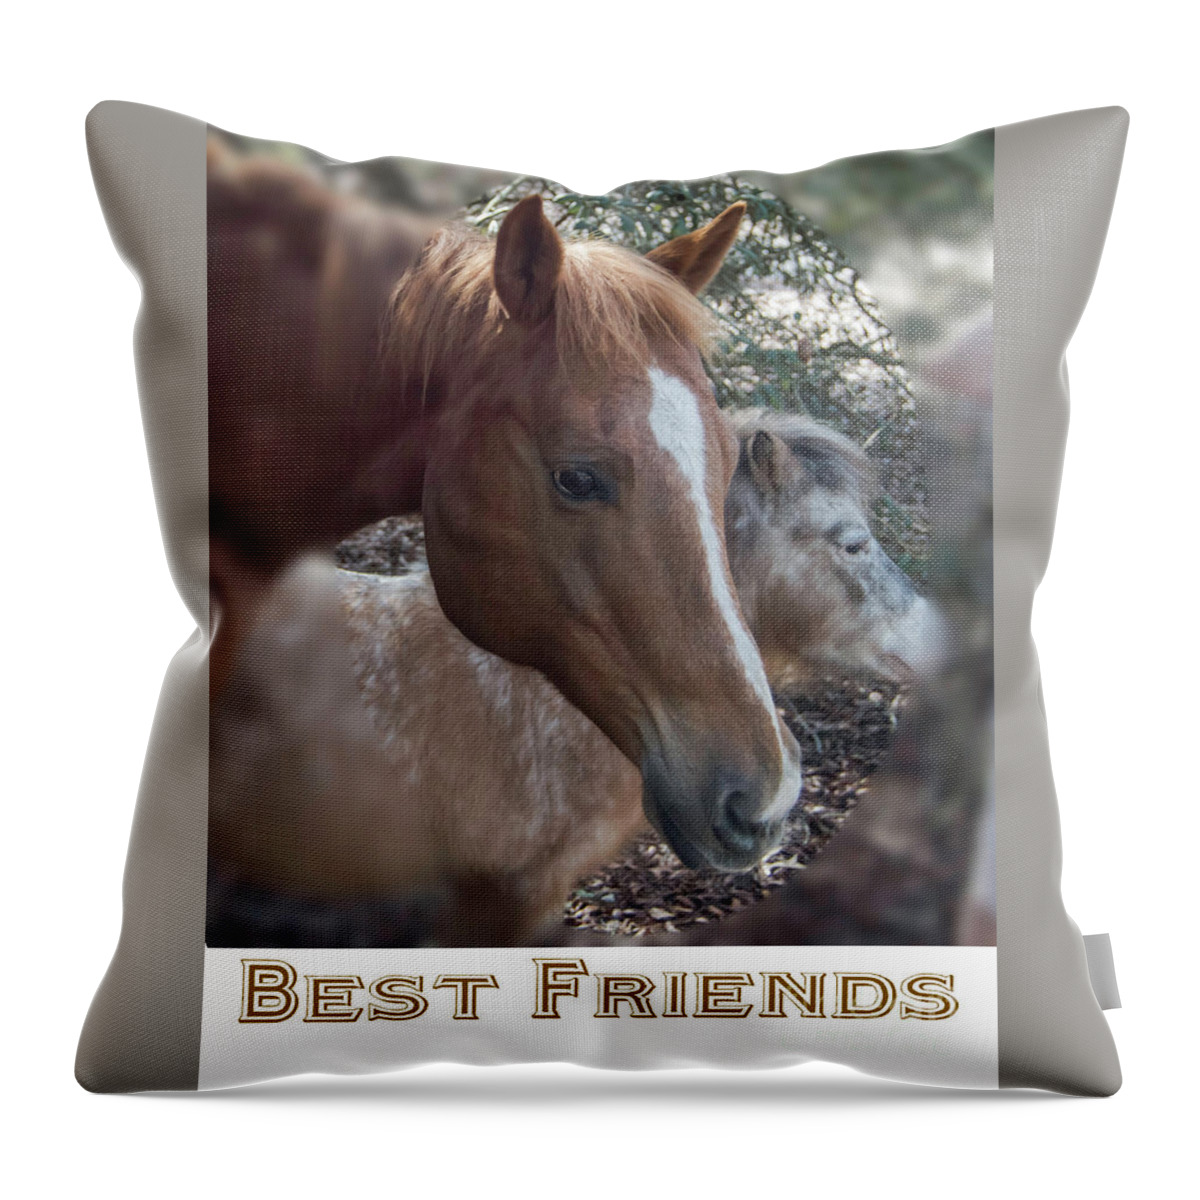 Friends Throw Pillow featuring the photograph Best Friends #1 by Judy Hall-Folde